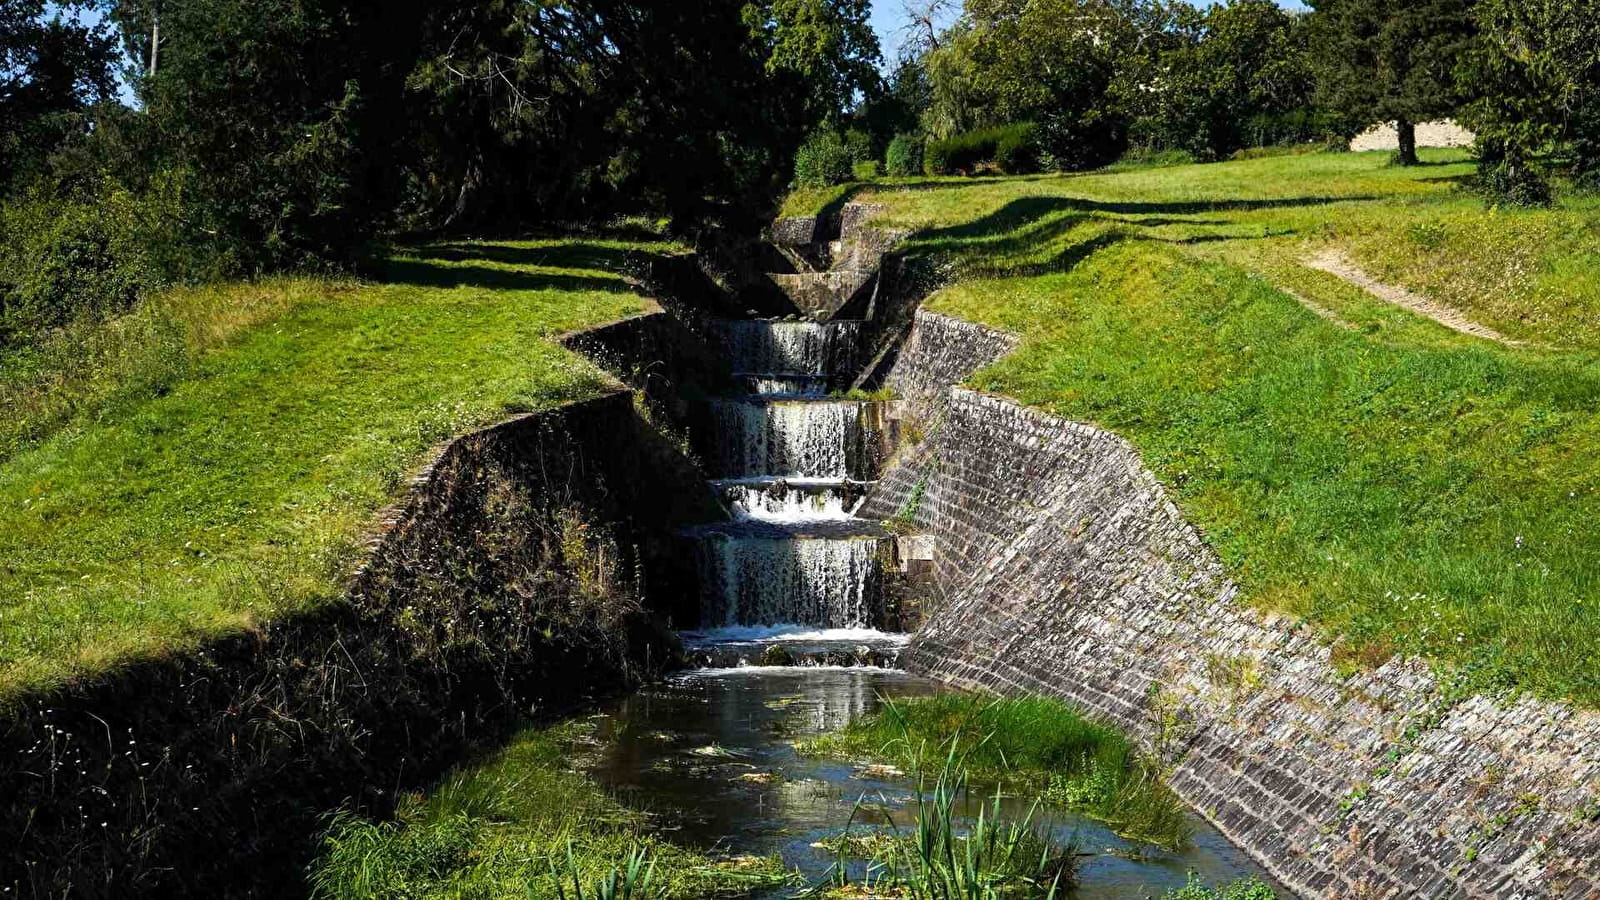 The gardens of the Lac du Bourdon spillways